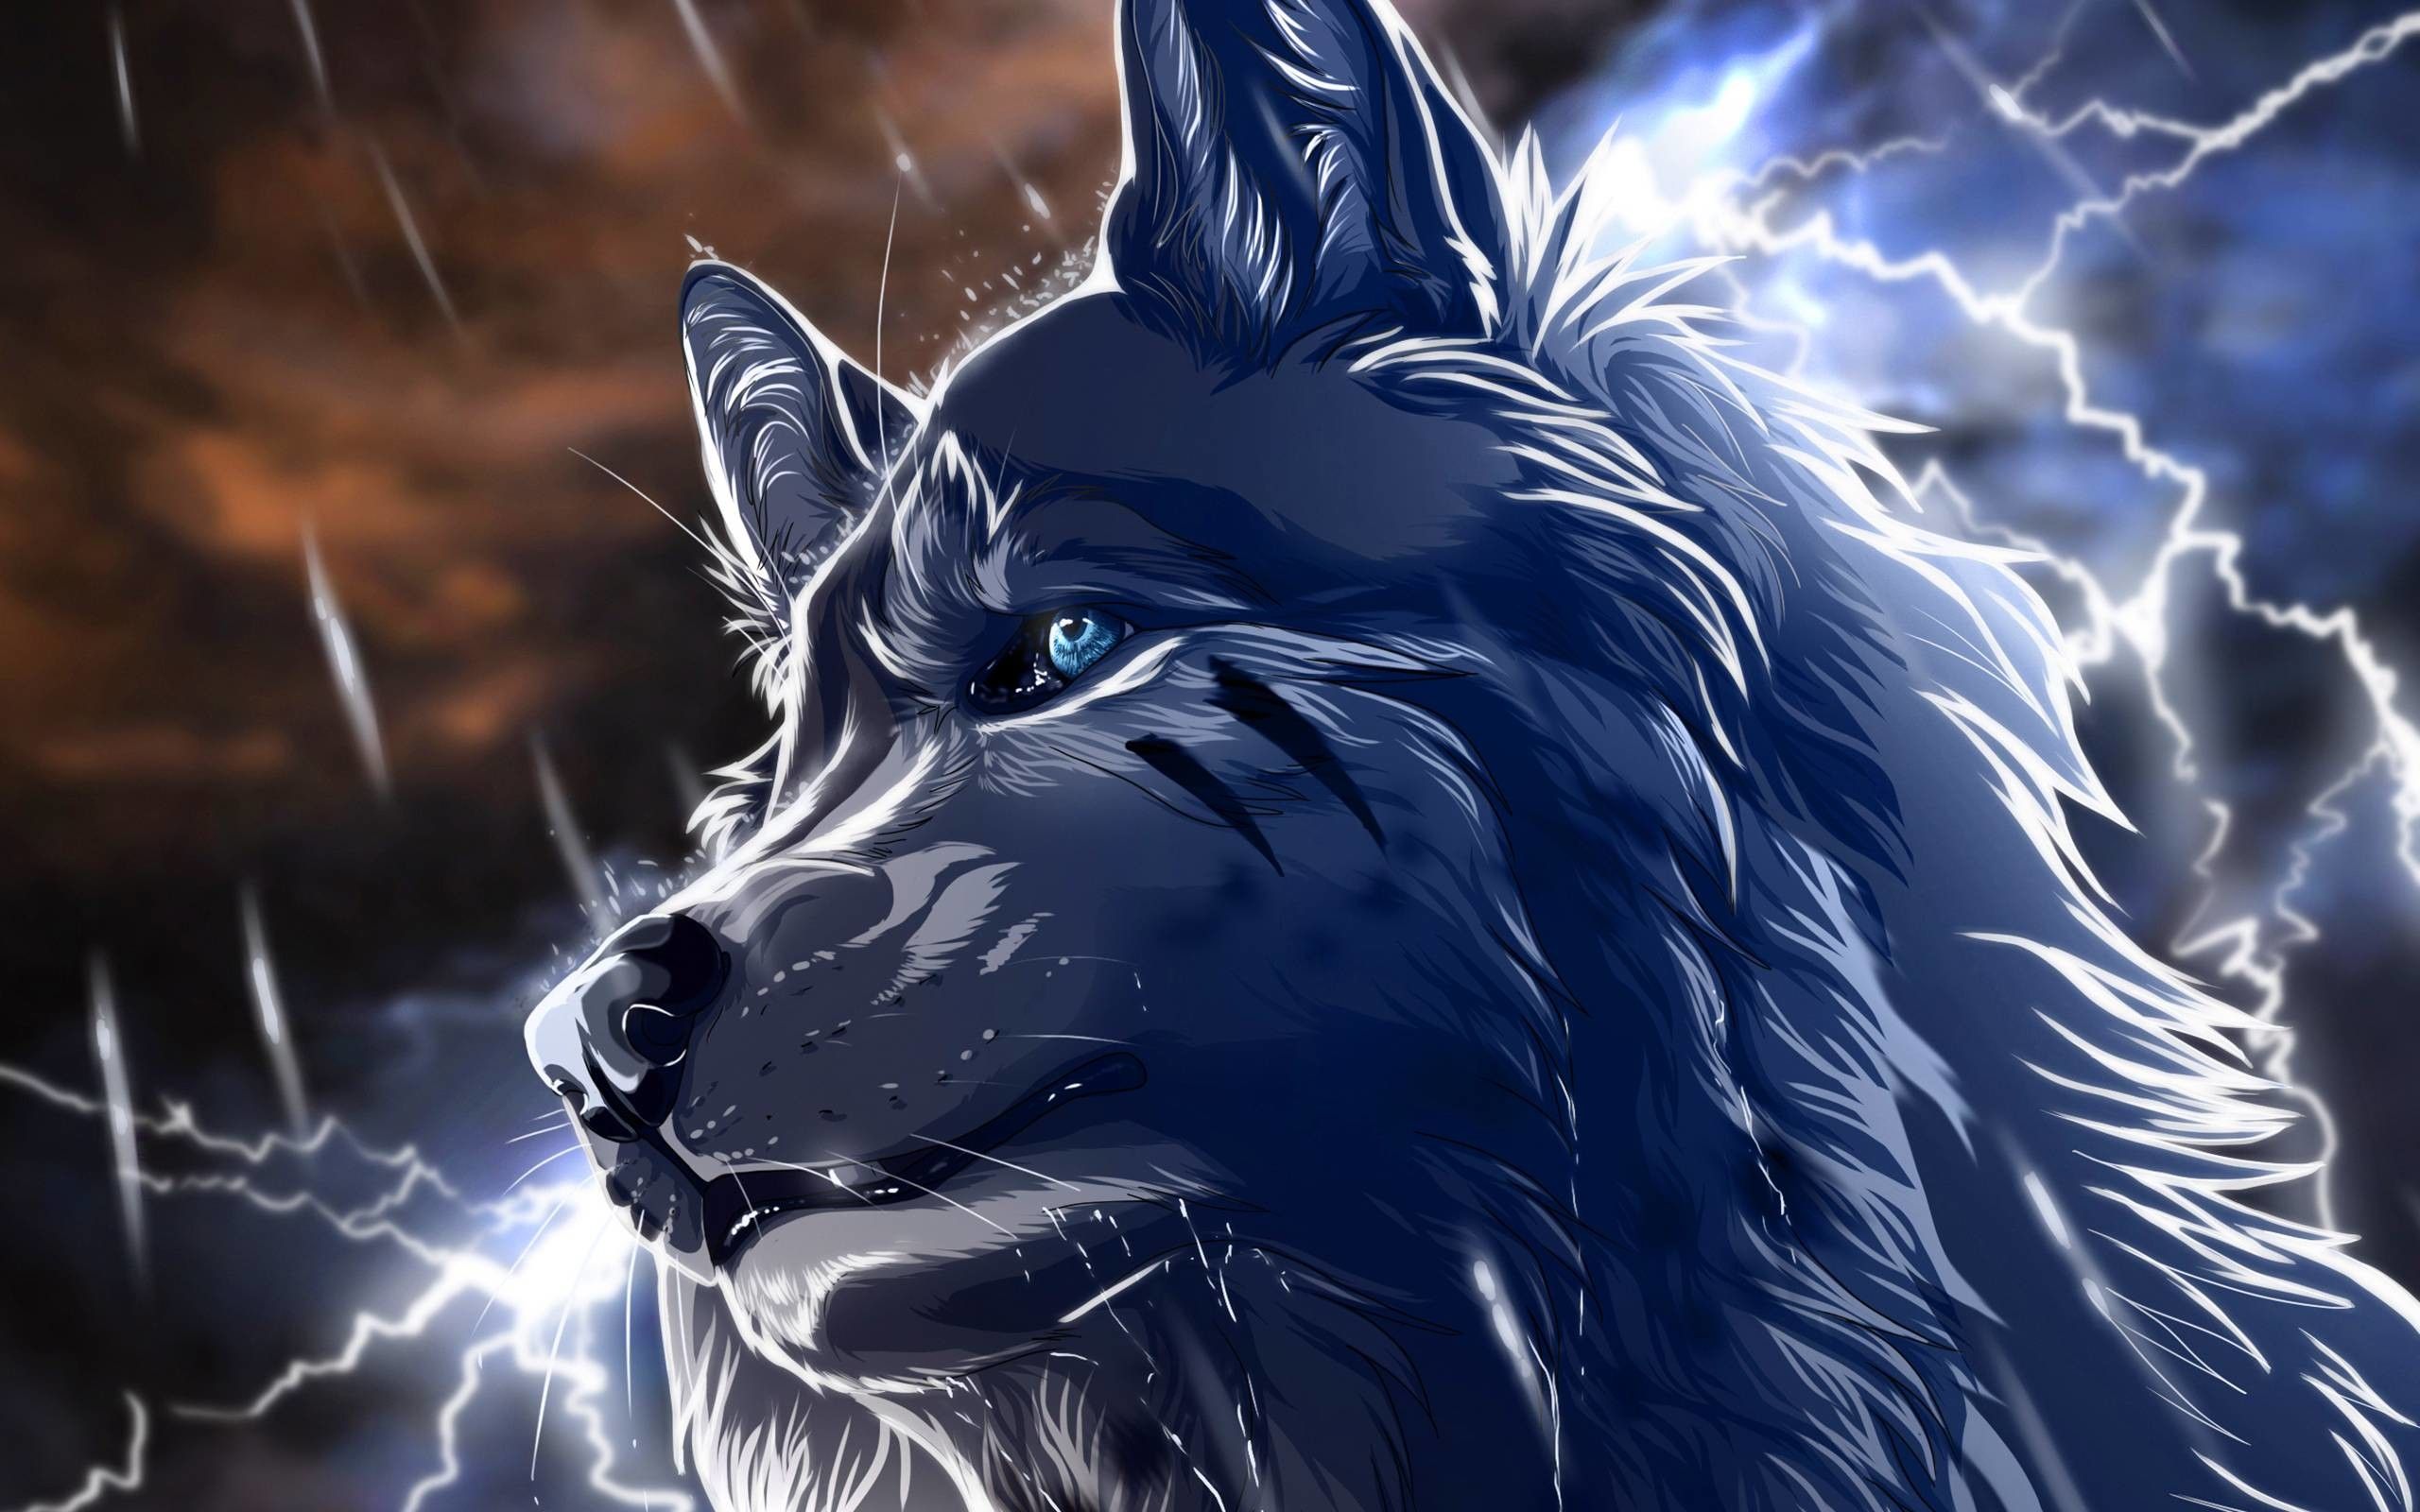 ArtStation - Blue wolf - commission